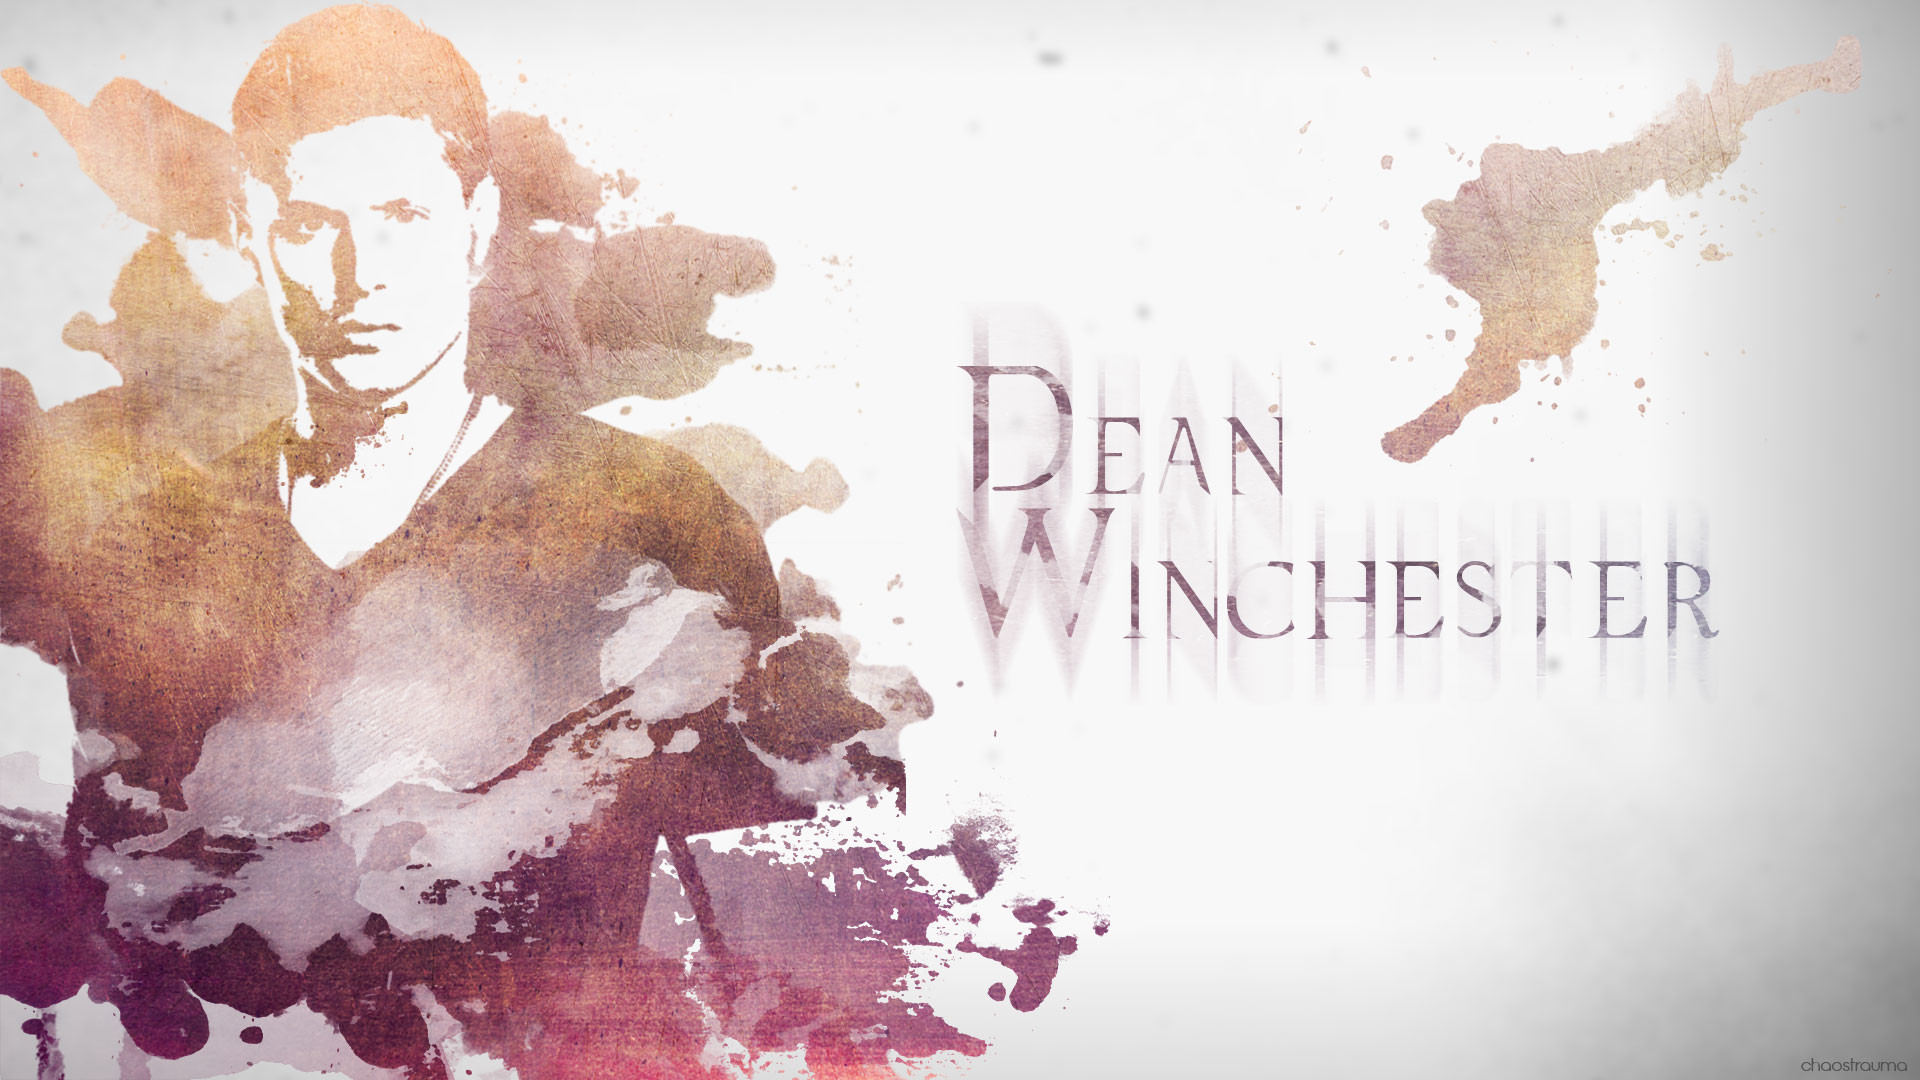 1920x1080 Supernatural Wallpaper - Dean Winchester by chaostrauma Supernatural  Wallpaper - Dean Winchester by chaostrauma